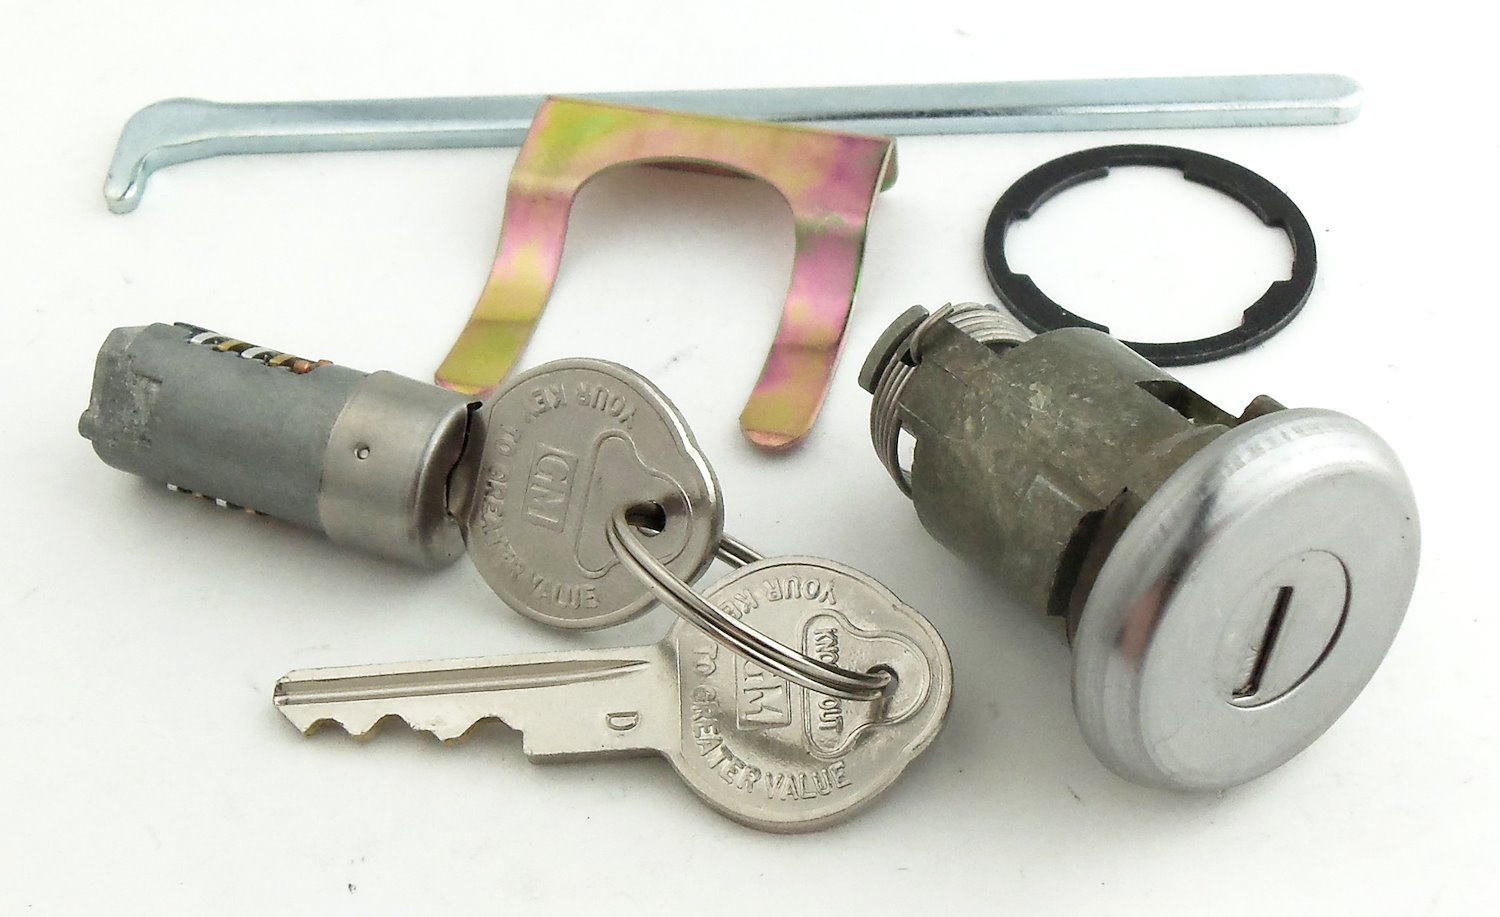 Trunk & Glovebox Lock Set Fits Select 1964-1974 GM Models [Original Pearhead Keys]